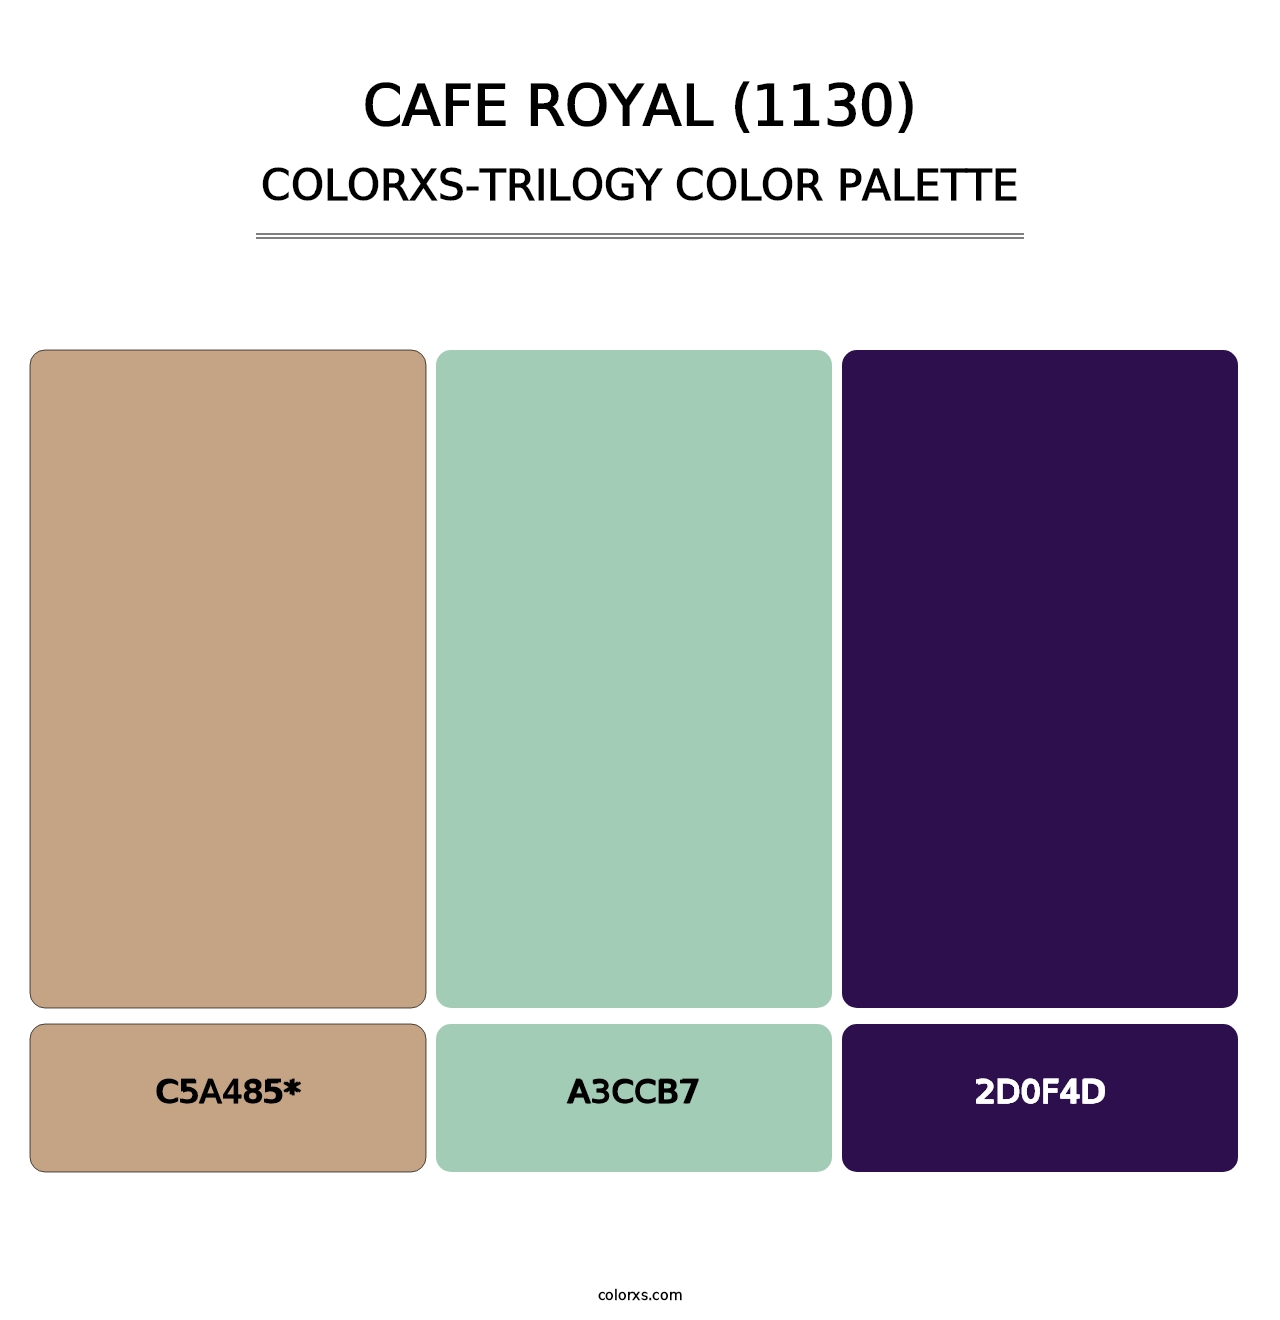 Cafe Royal (1130) - Colorxs Trilogy Palette